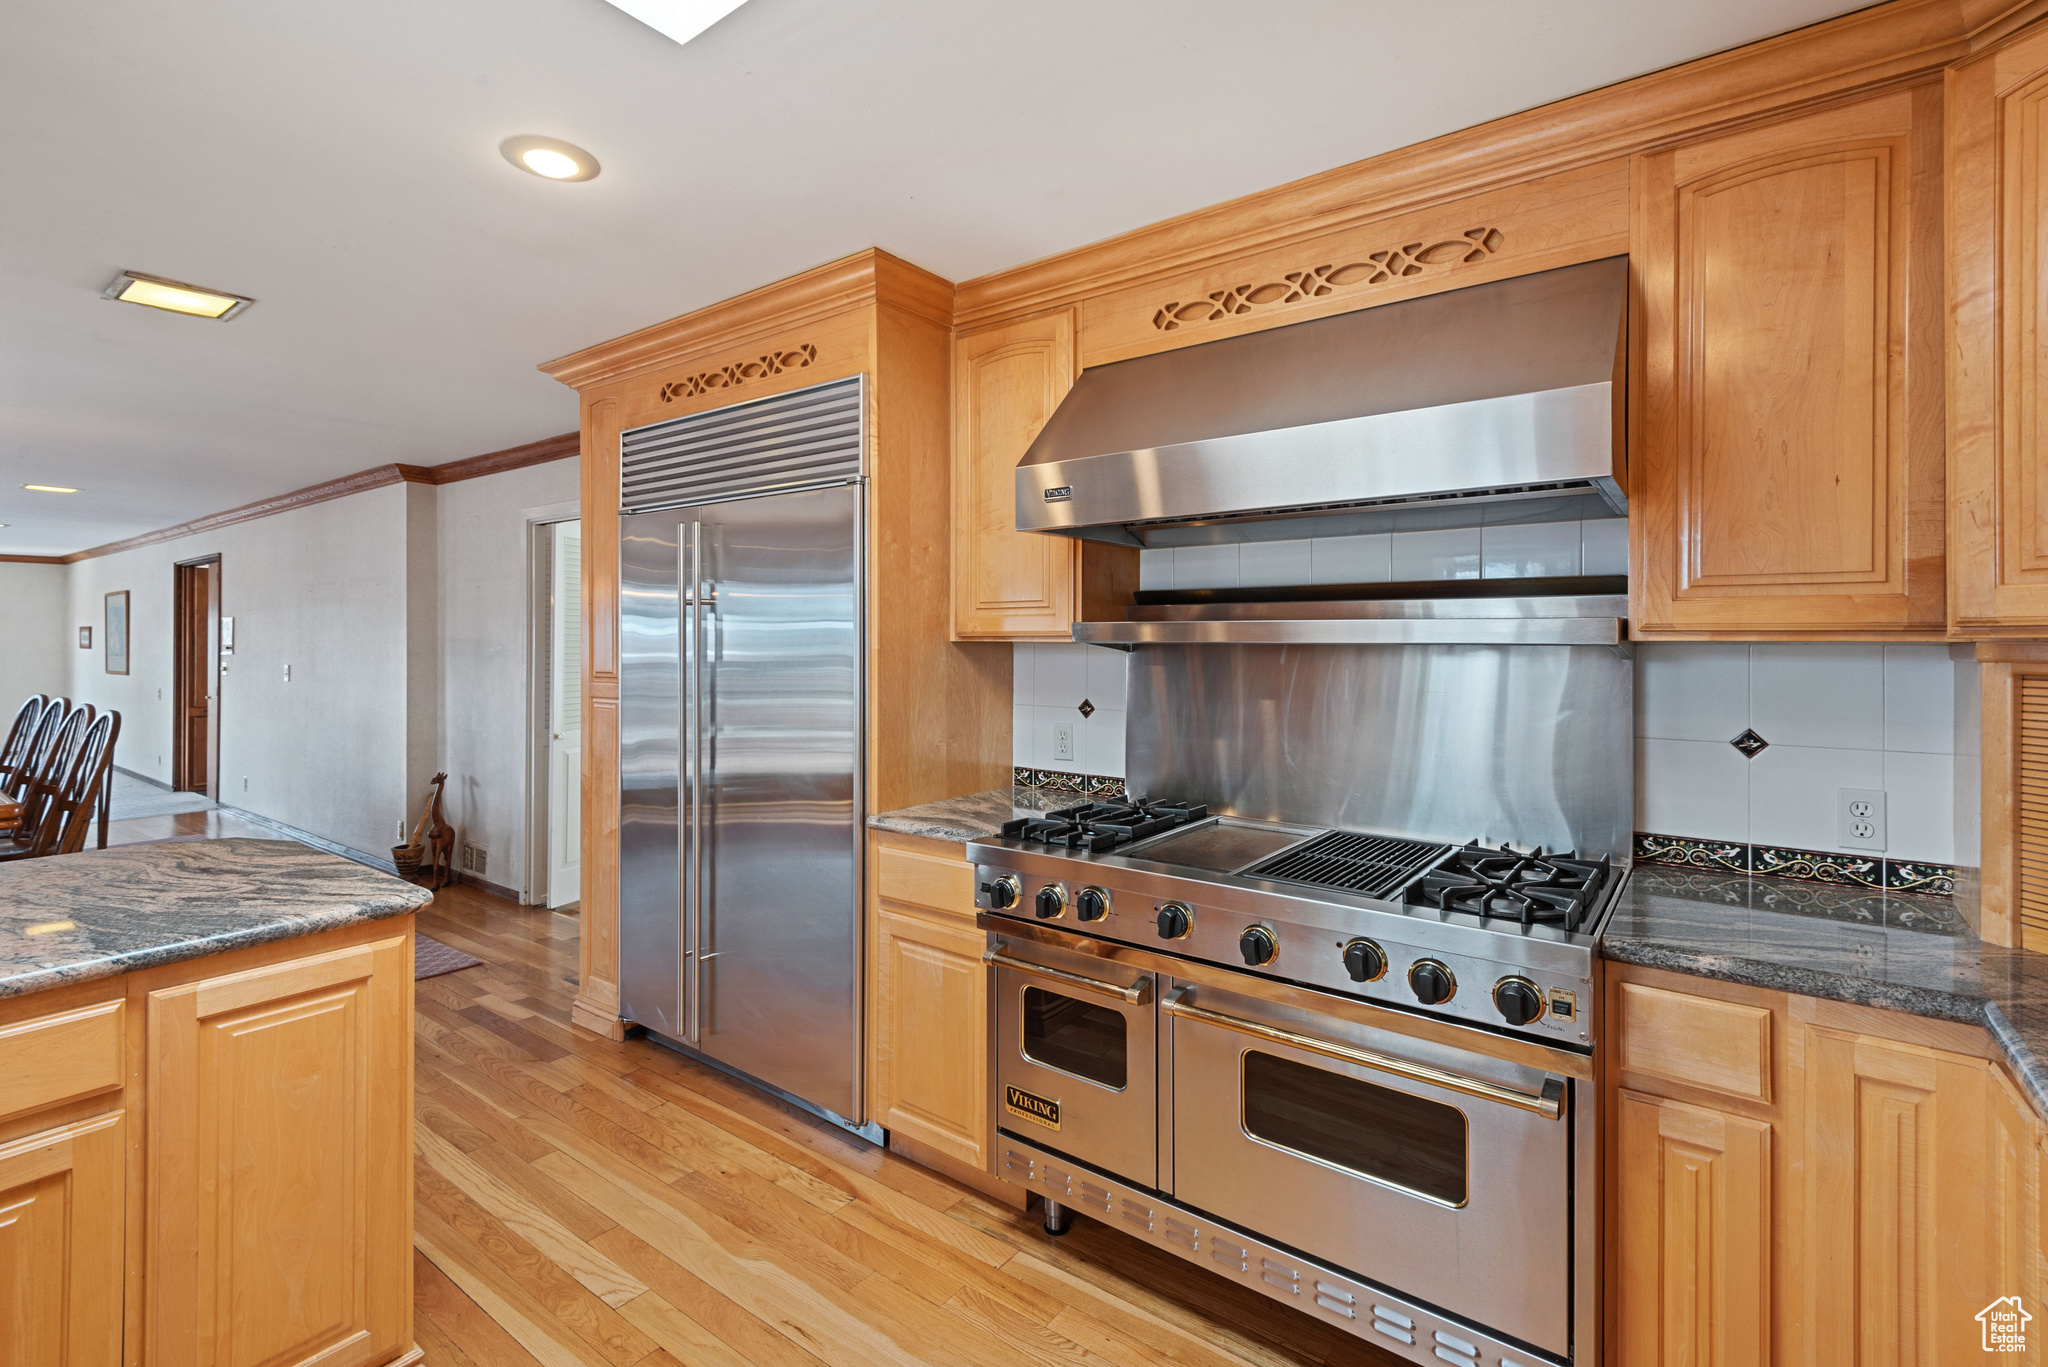 Kitchen with  Viking Gas Range, wall chimney range hood, Sub Zero Refrigerator/Freezer